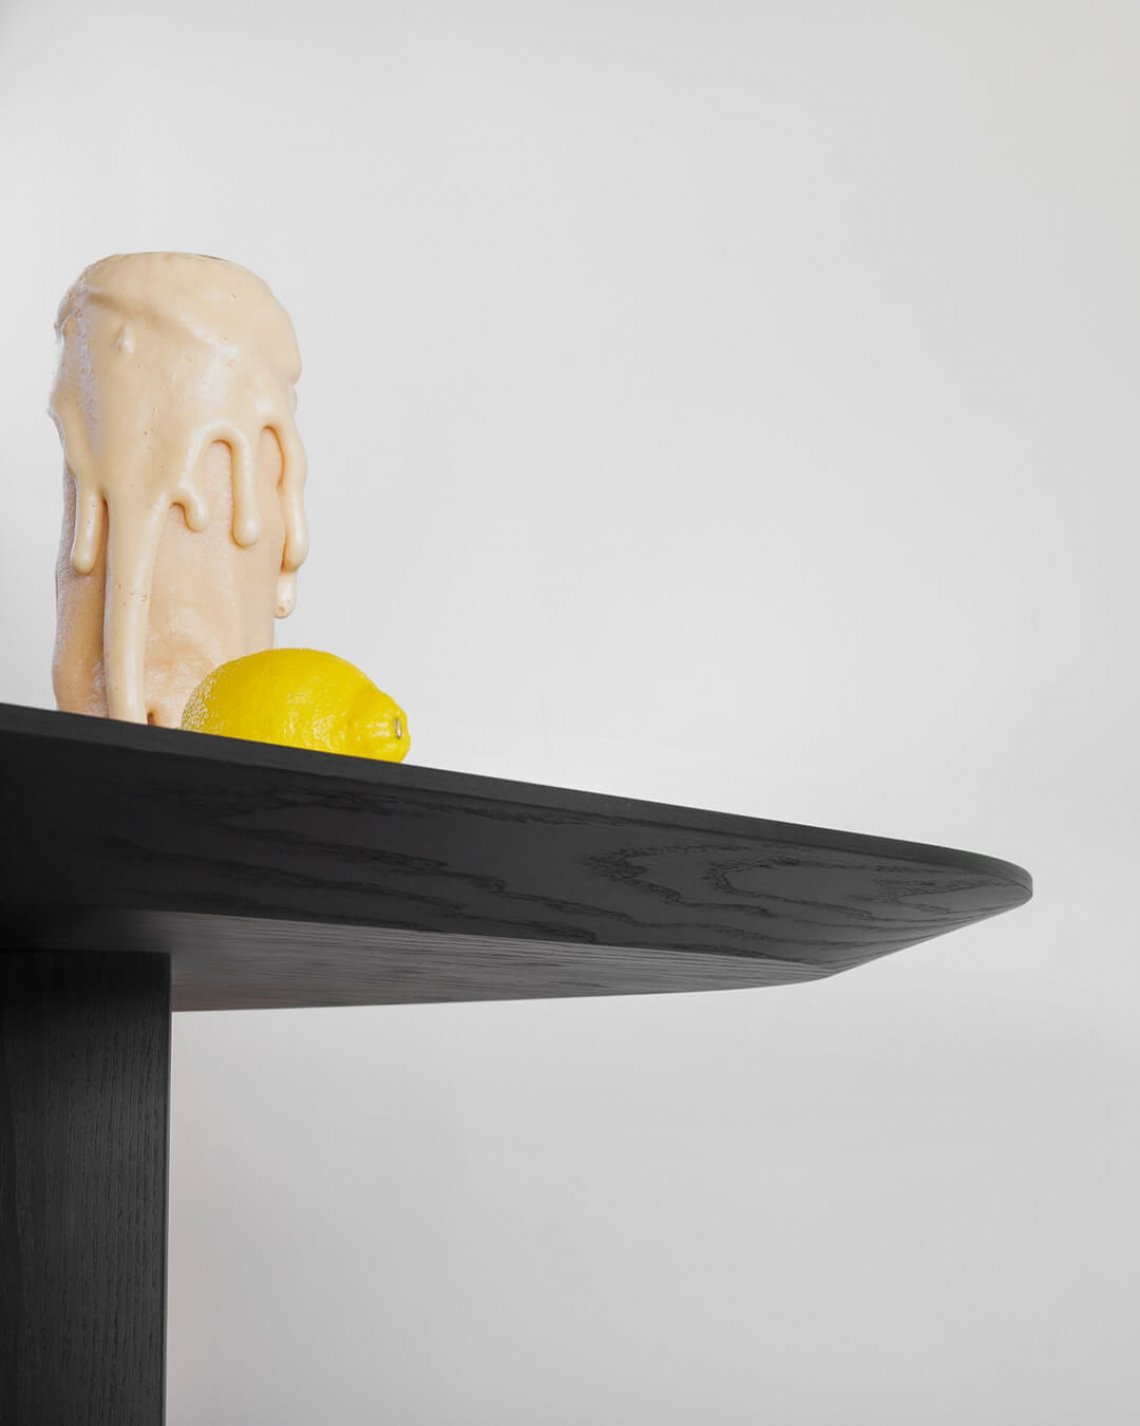 Plauto Dining Table from Miniforms, designed by Simone Sabatti